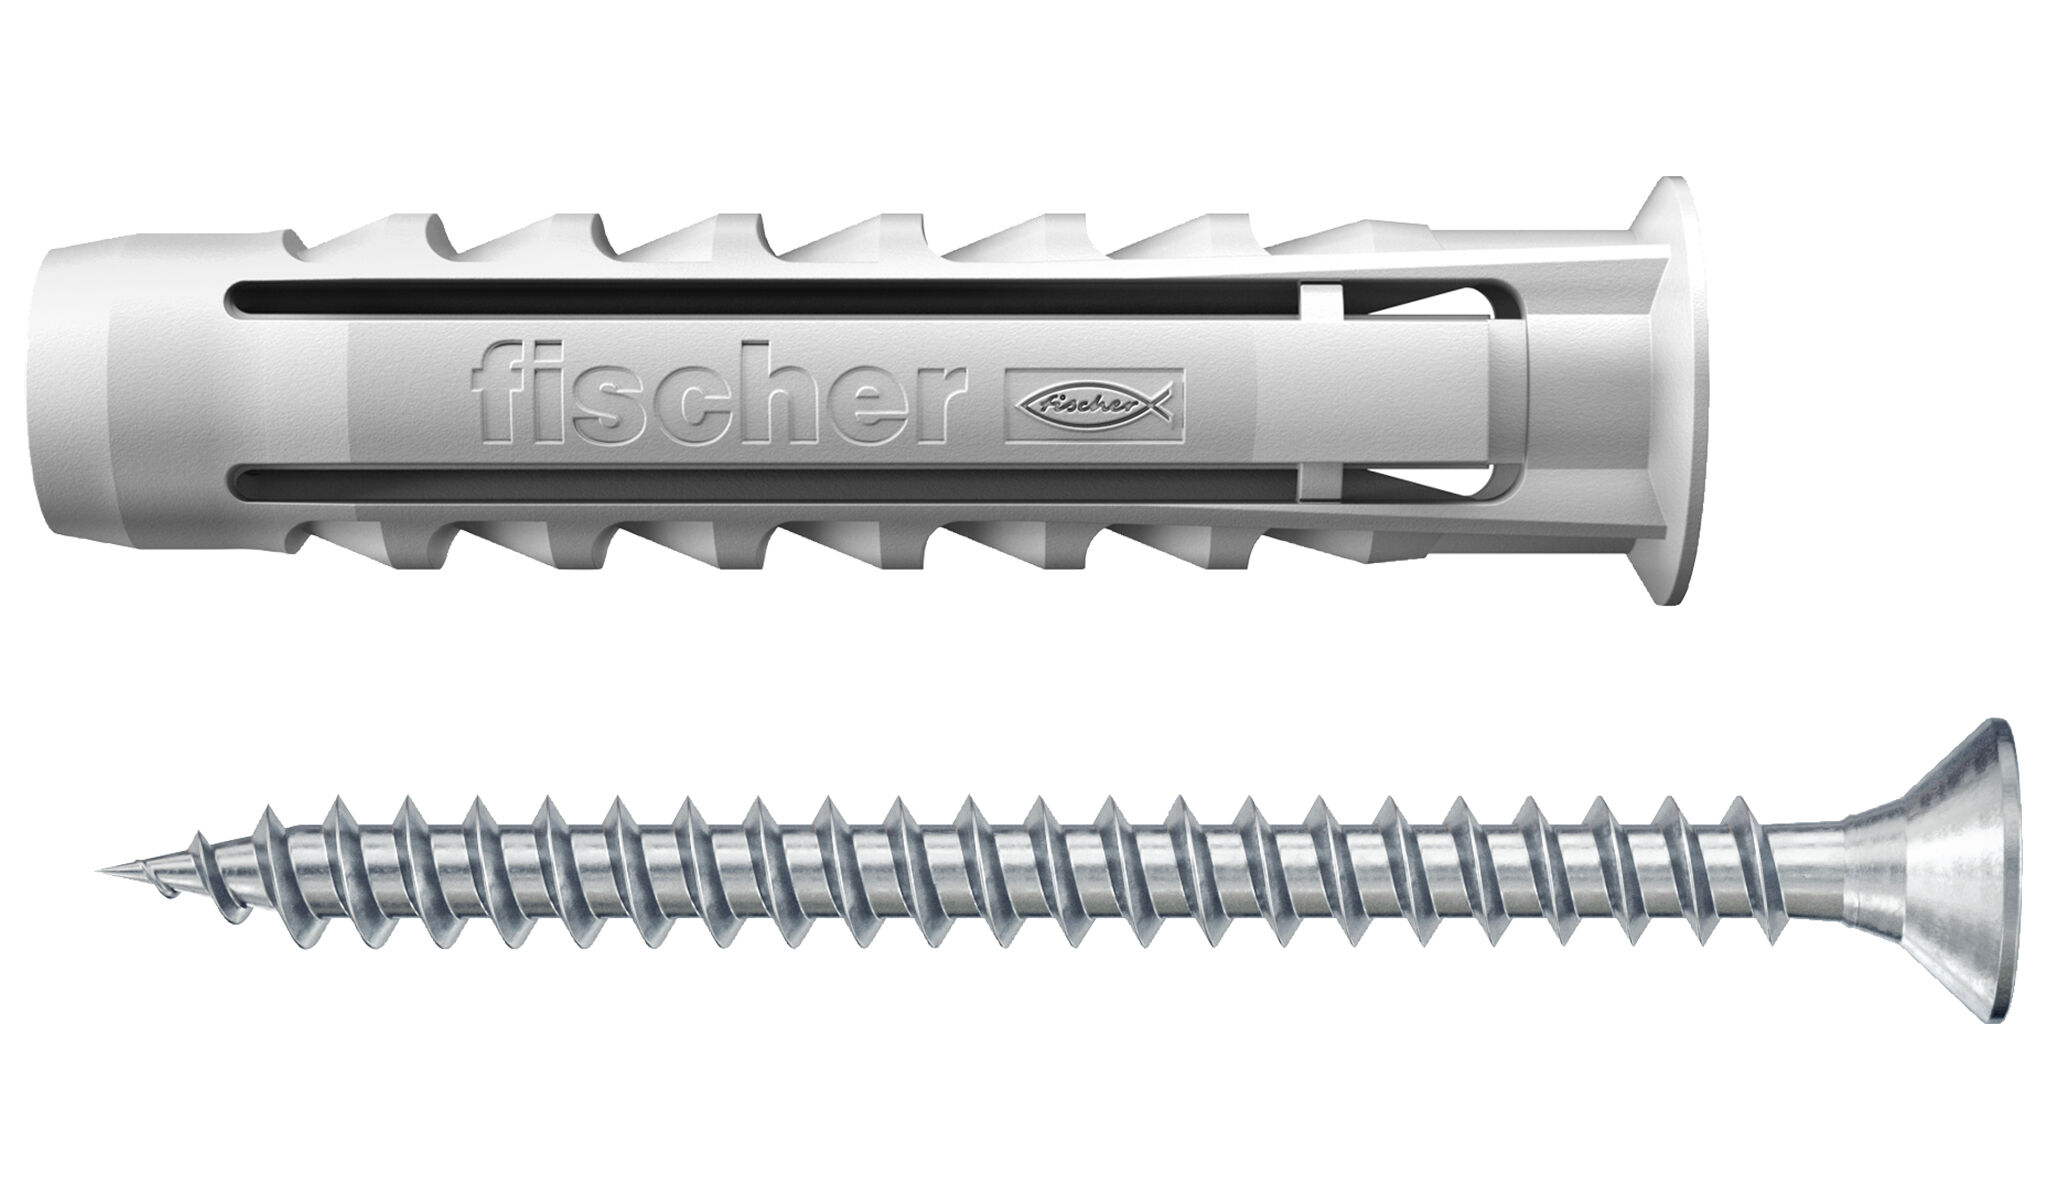 fischer Expansion plug SX 6 x 30 S with screw